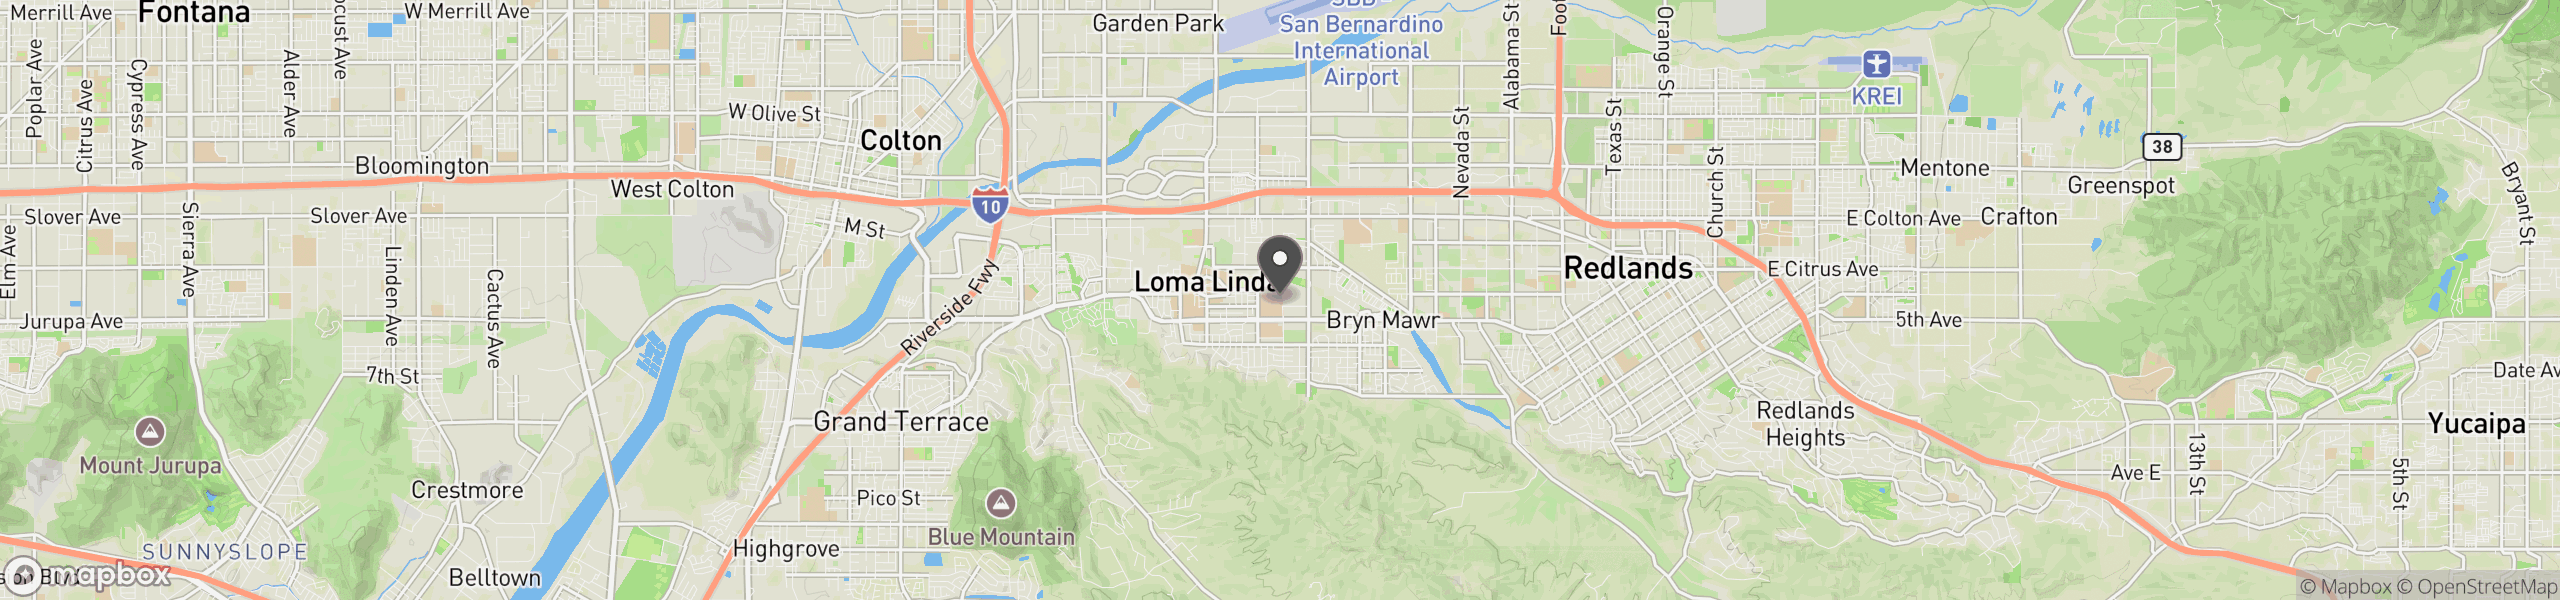 Loma Linda, CA 92354